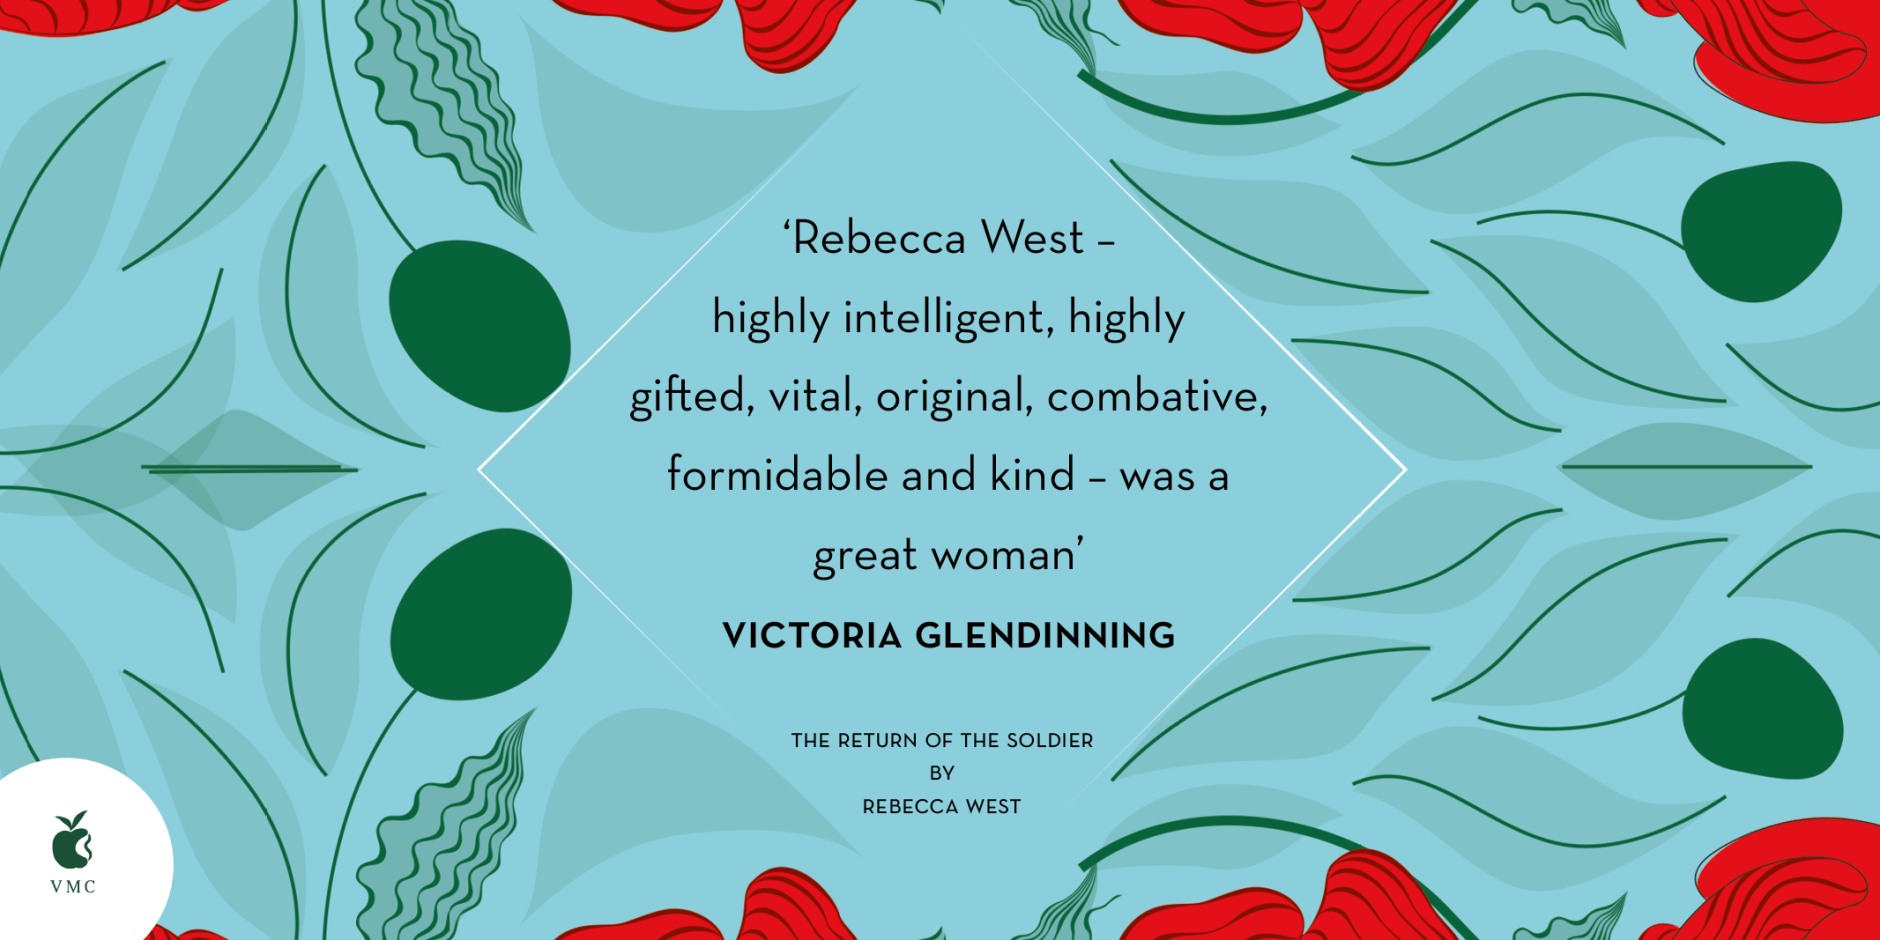 Victoria Glendinning on Rebecca West